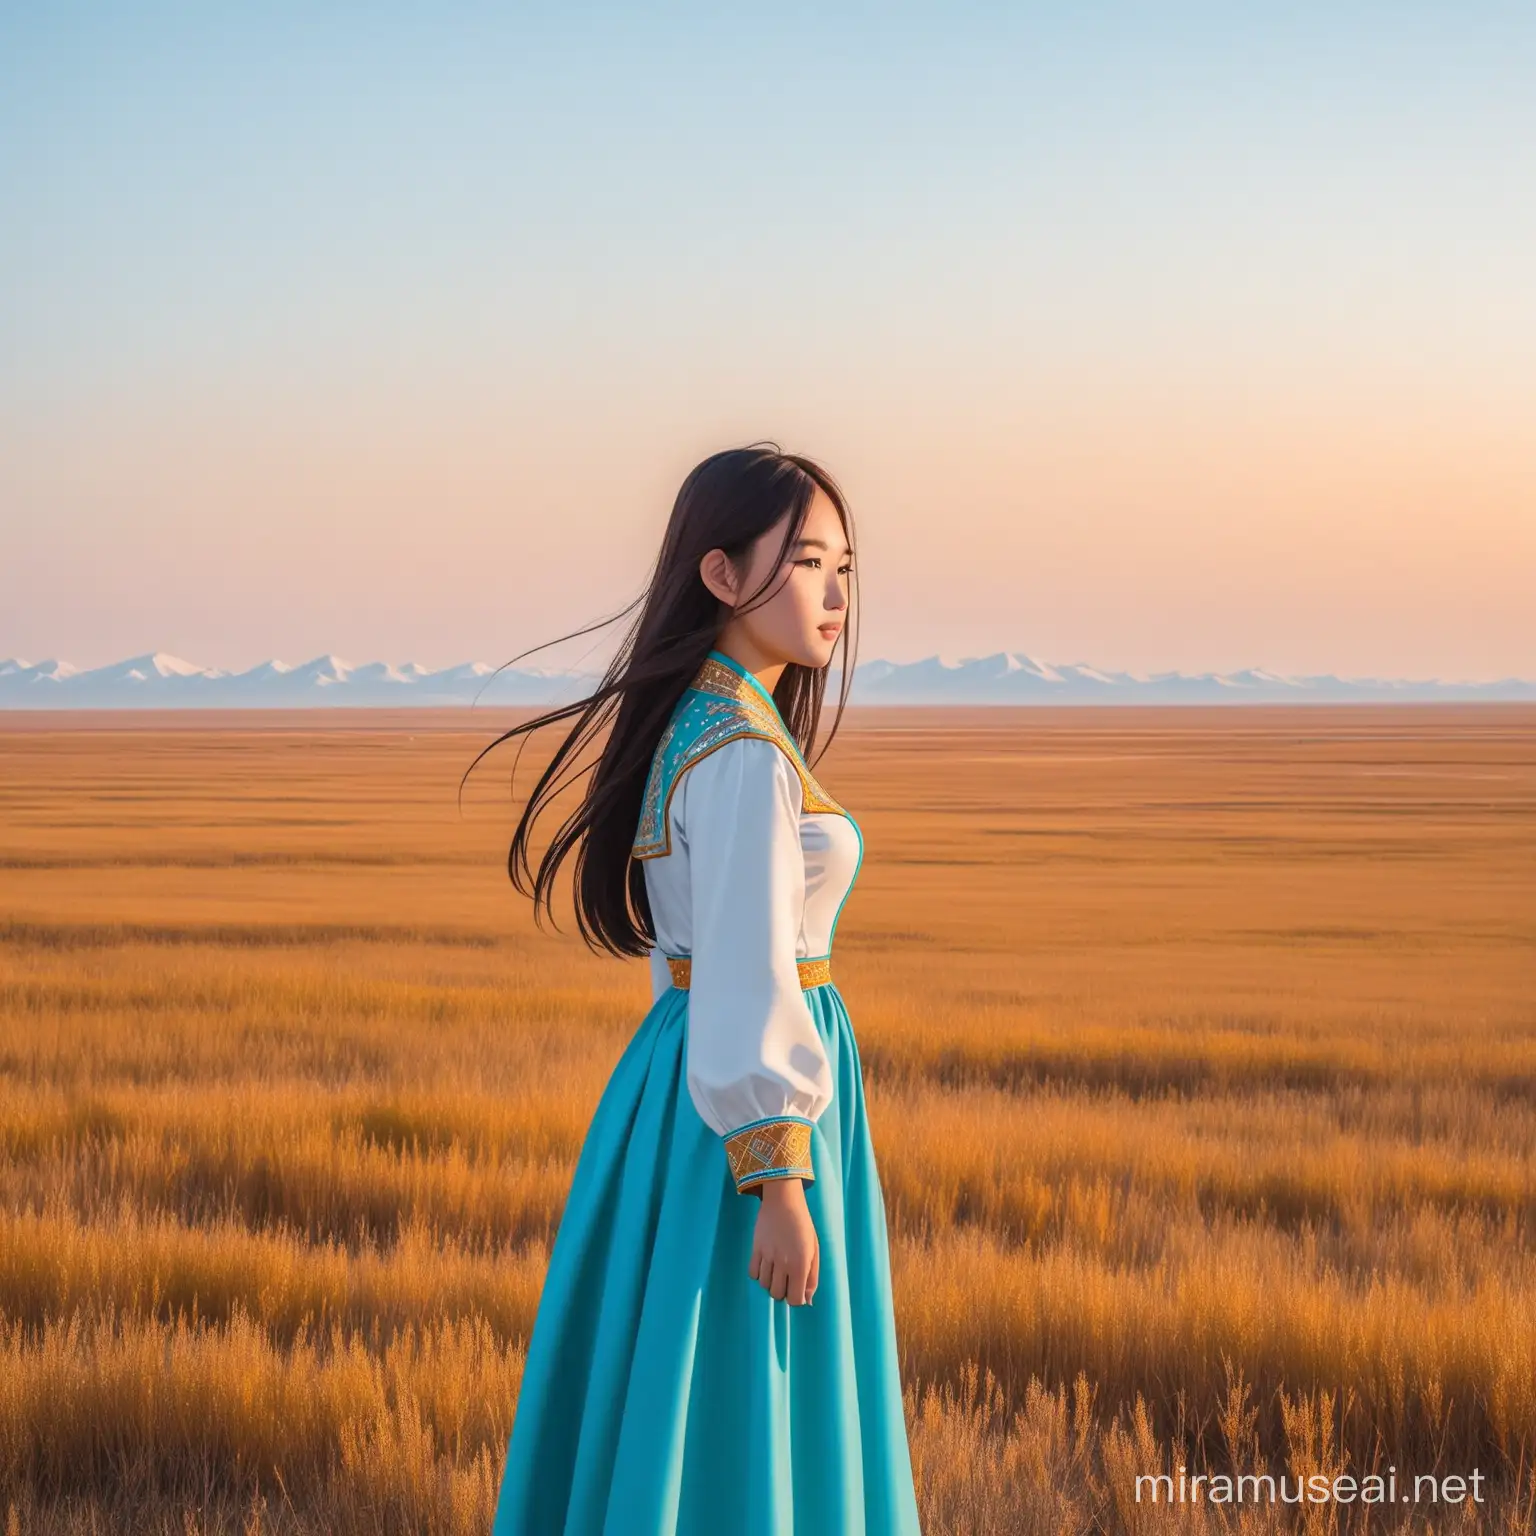 kazakh girl far away